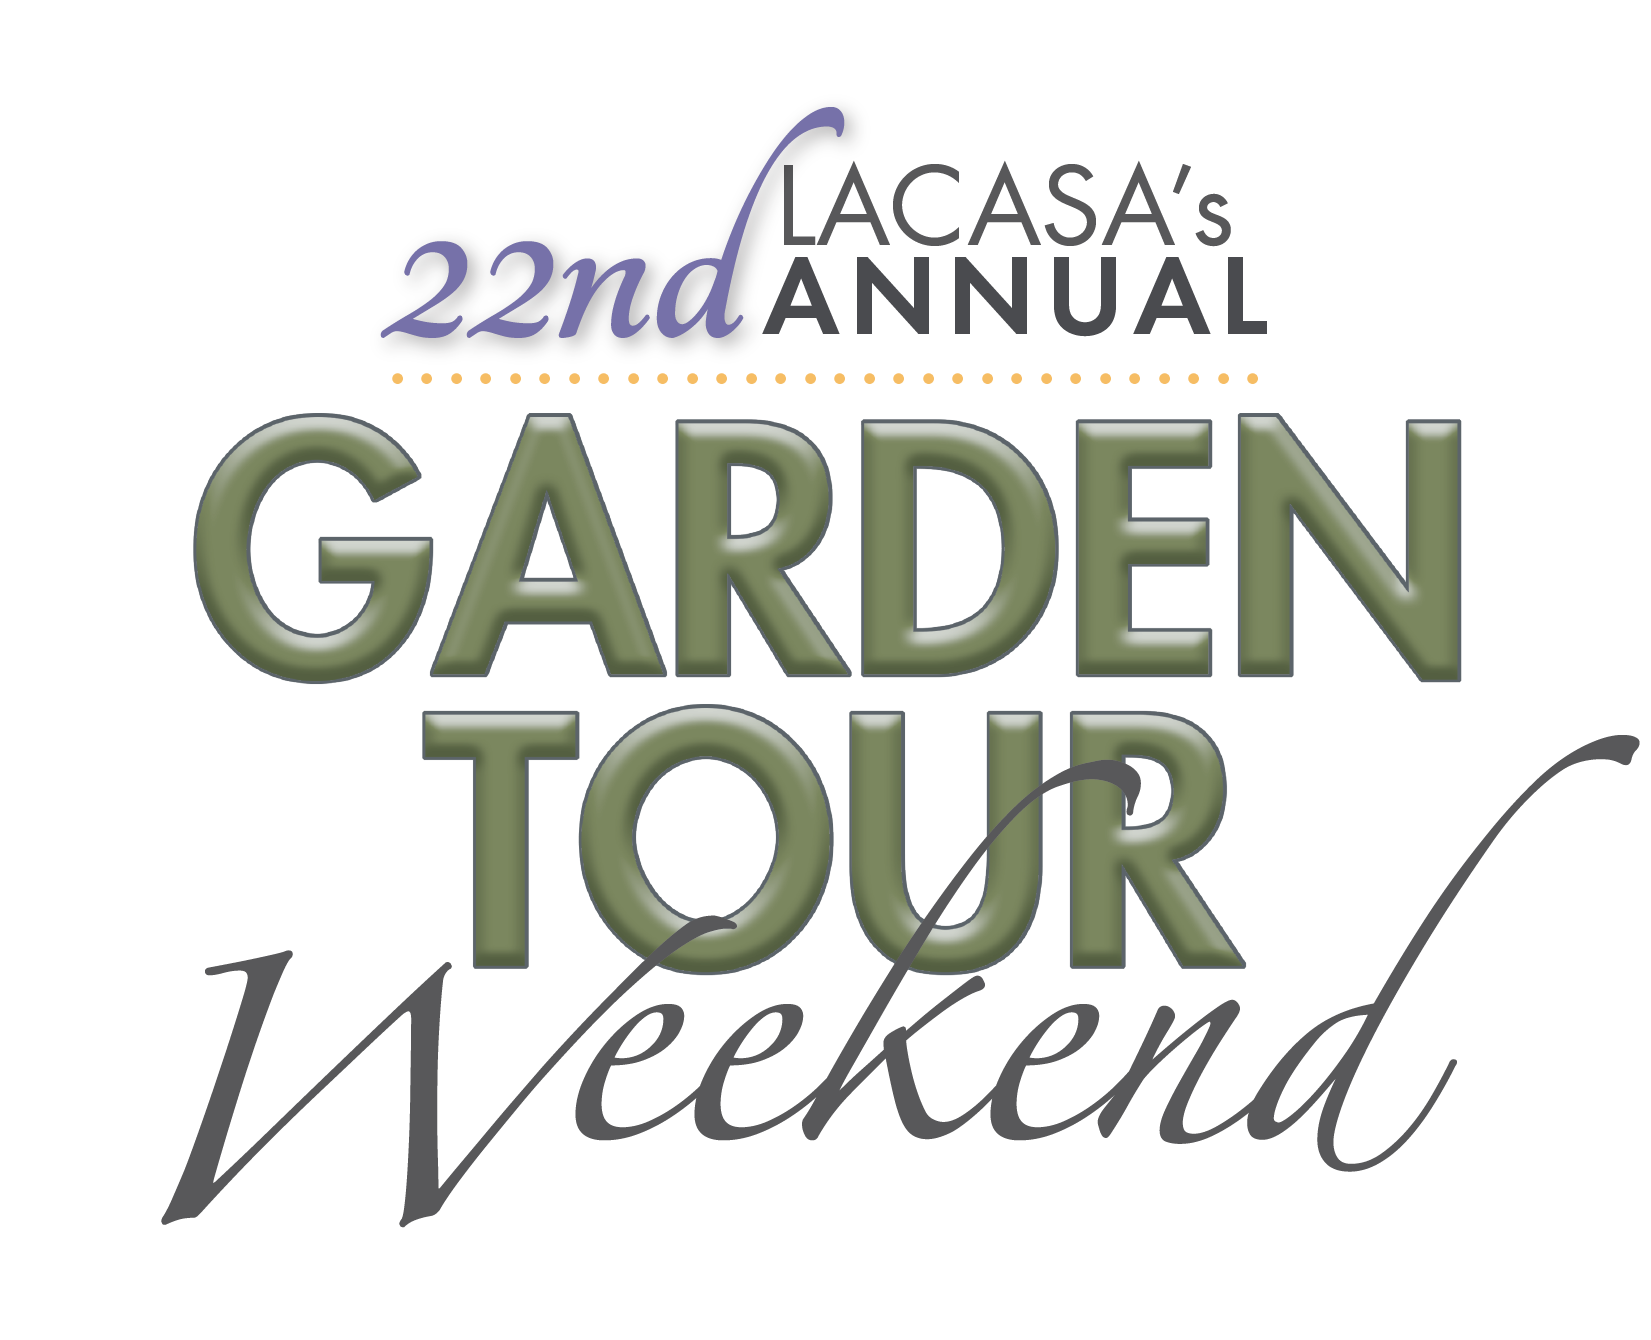 LACASA's Garden Tour Weekend